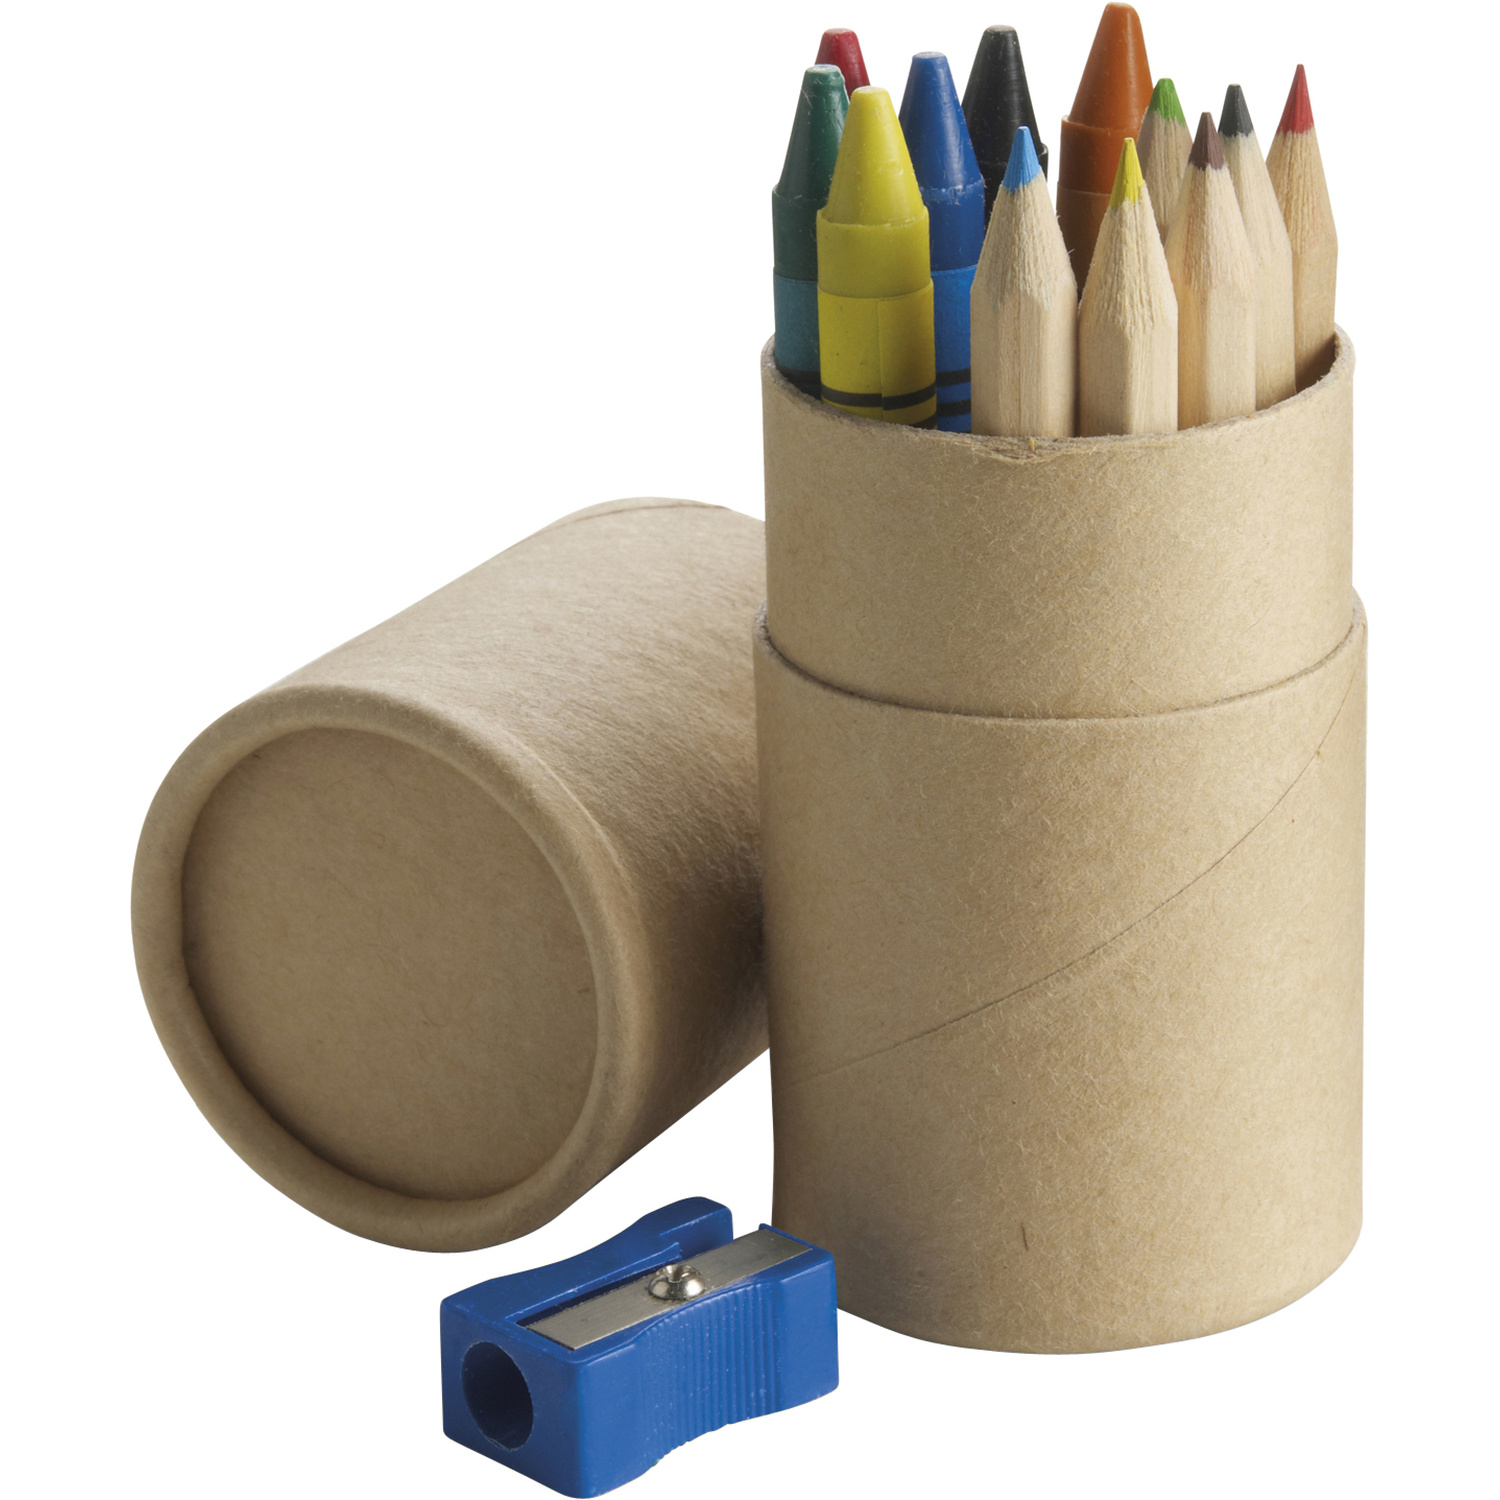 002785 011999999 3d090 gbo pro01 fal - Coloured pencil & crayon set (12pc)